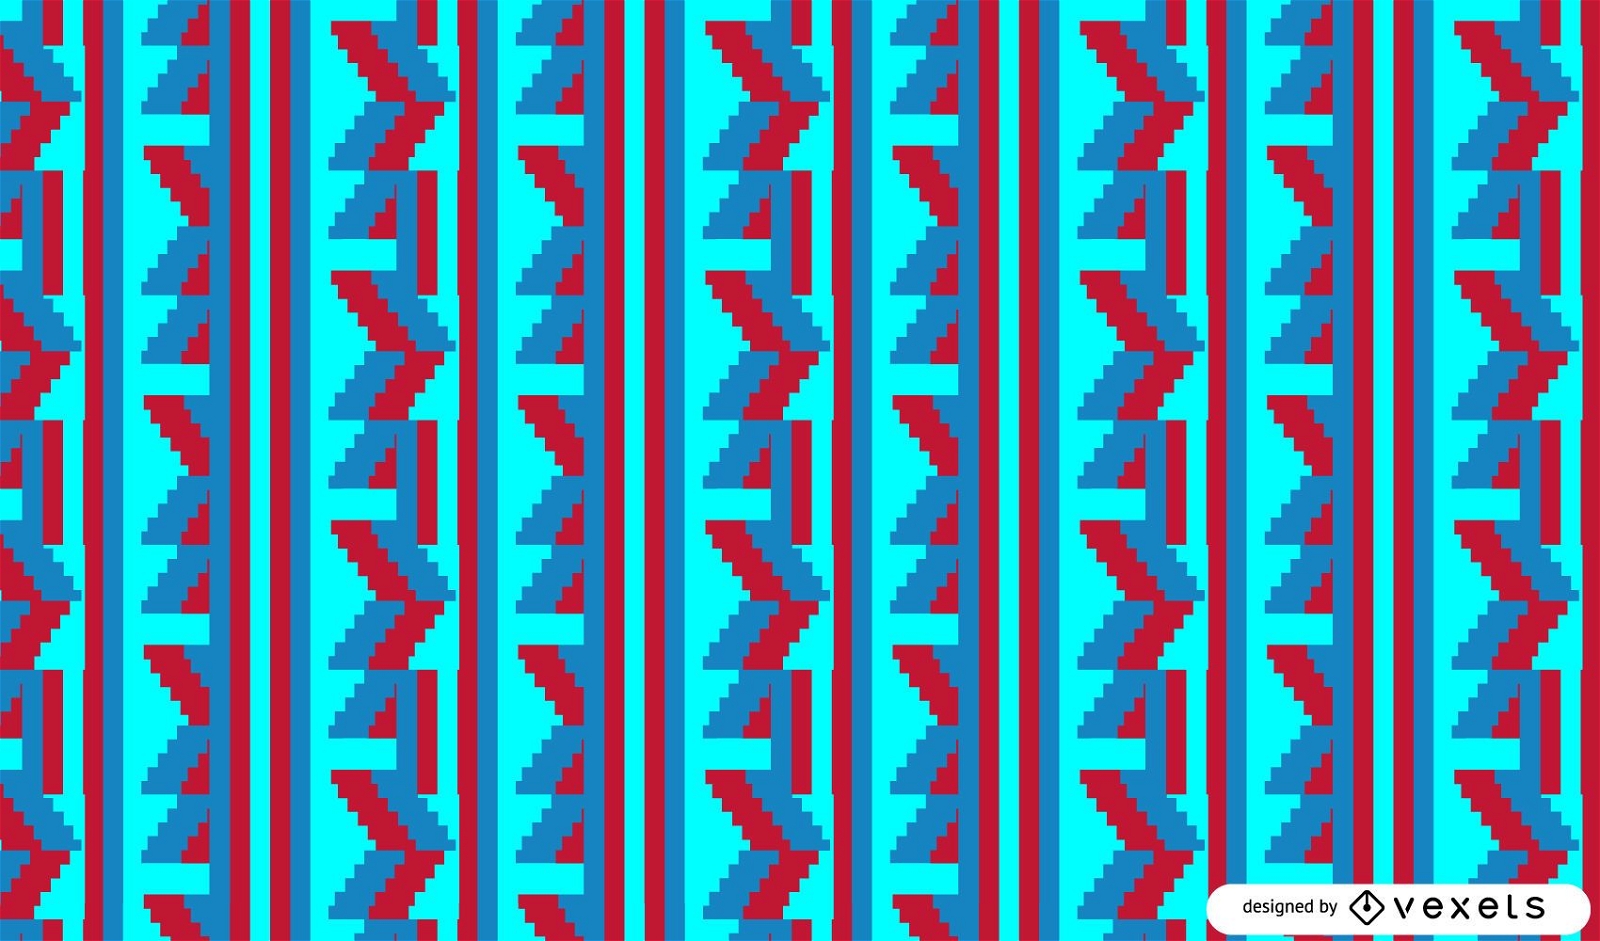 Bright tribal pattern design